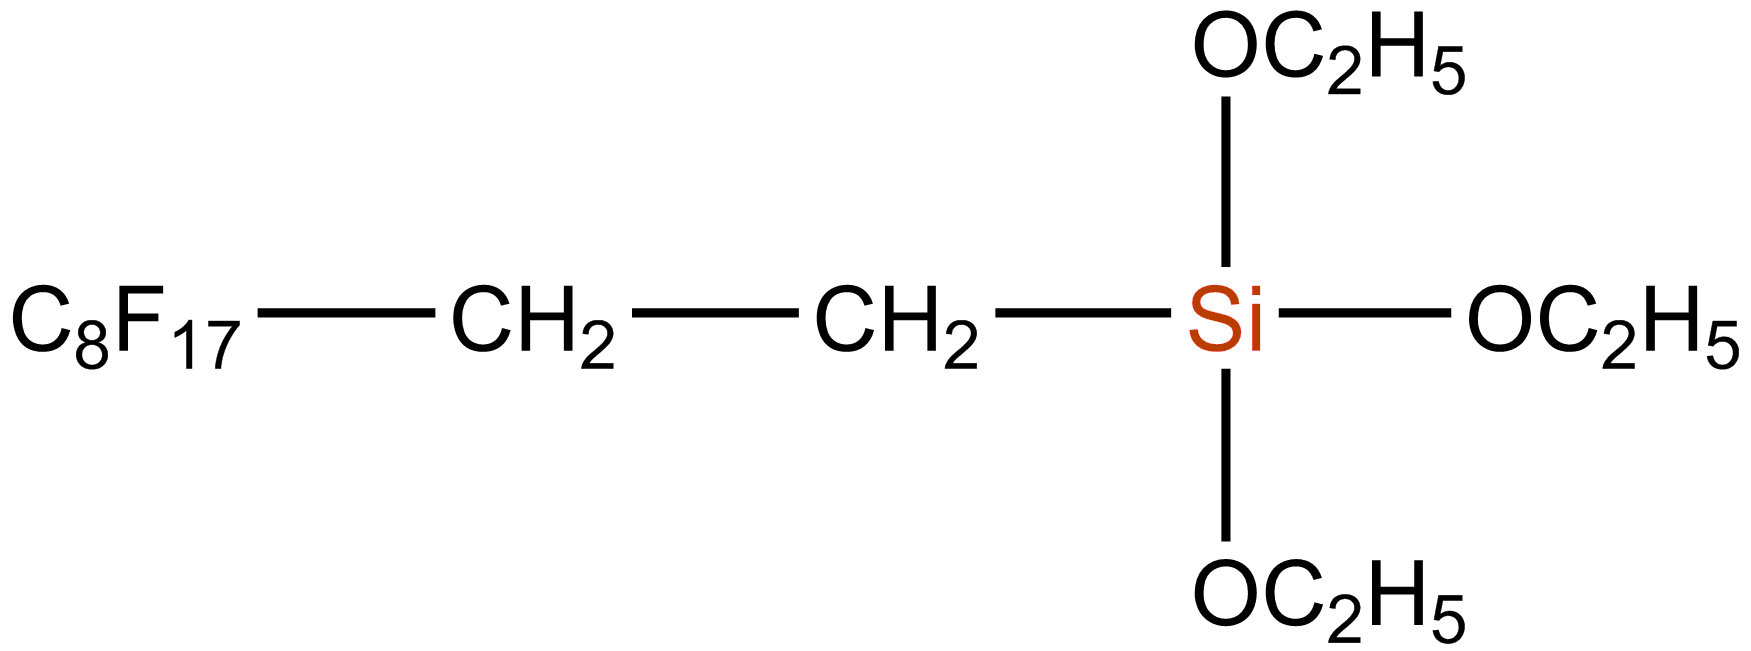 1H,1H,2H,2H-perfluorodecyltriethoxysilane